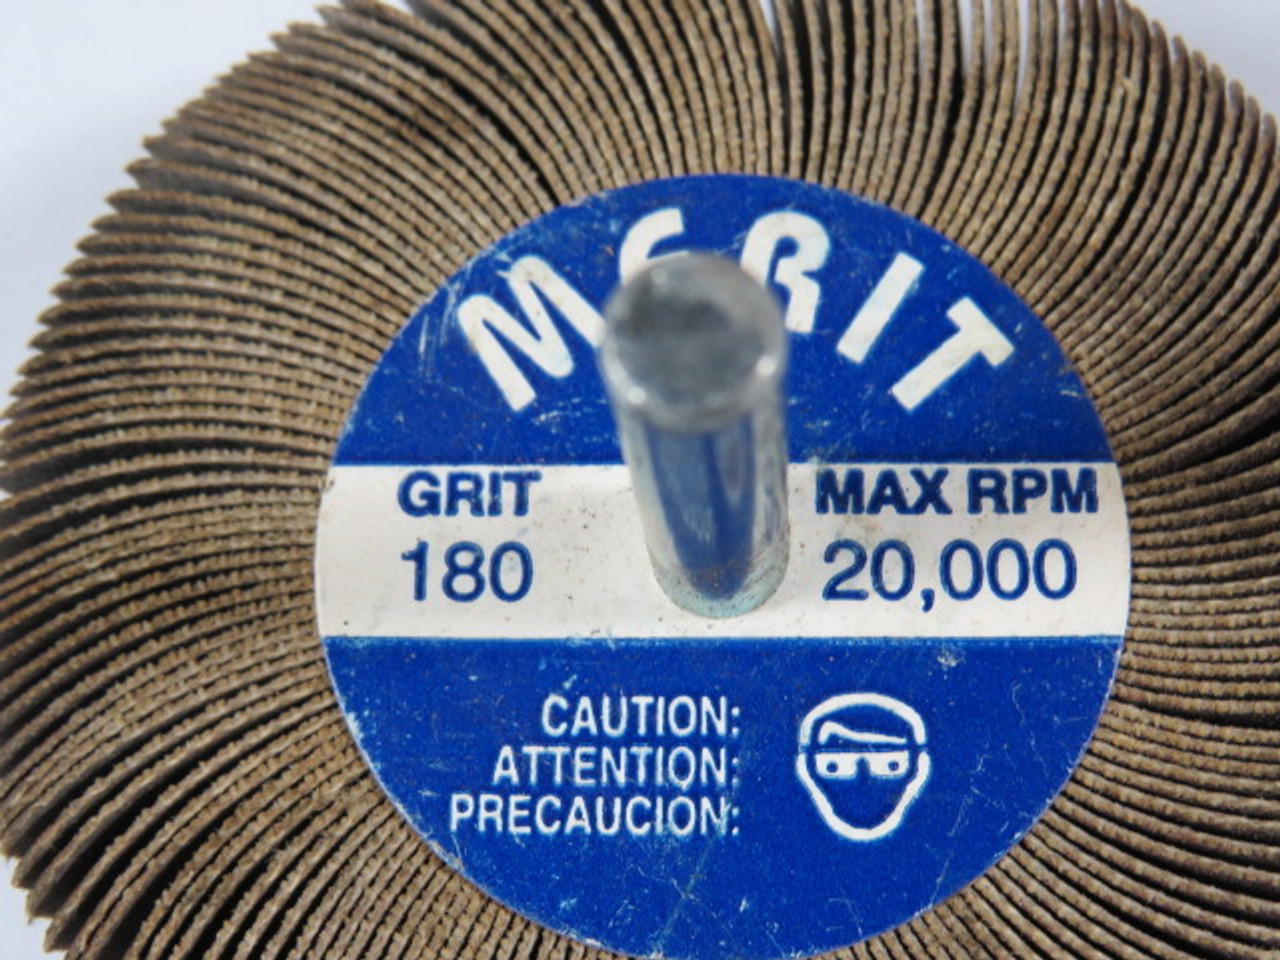 Merit 180-Grit Flap Wheel 20,000 MAX RPM USED